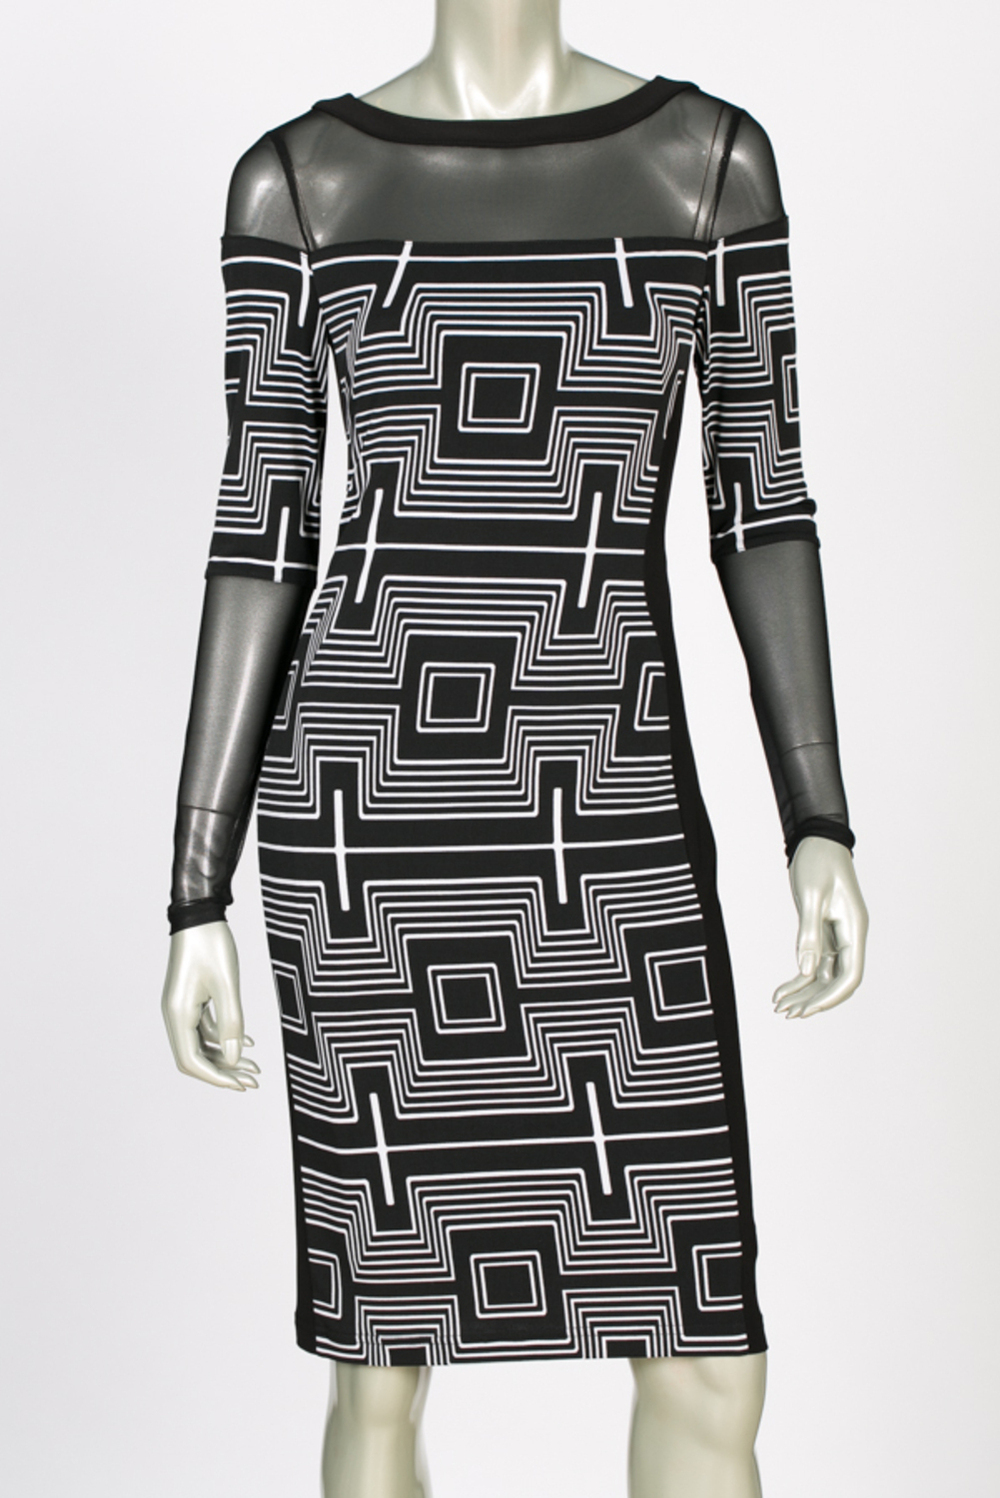 Joseph Ribkoff dress style 143639. Black/white